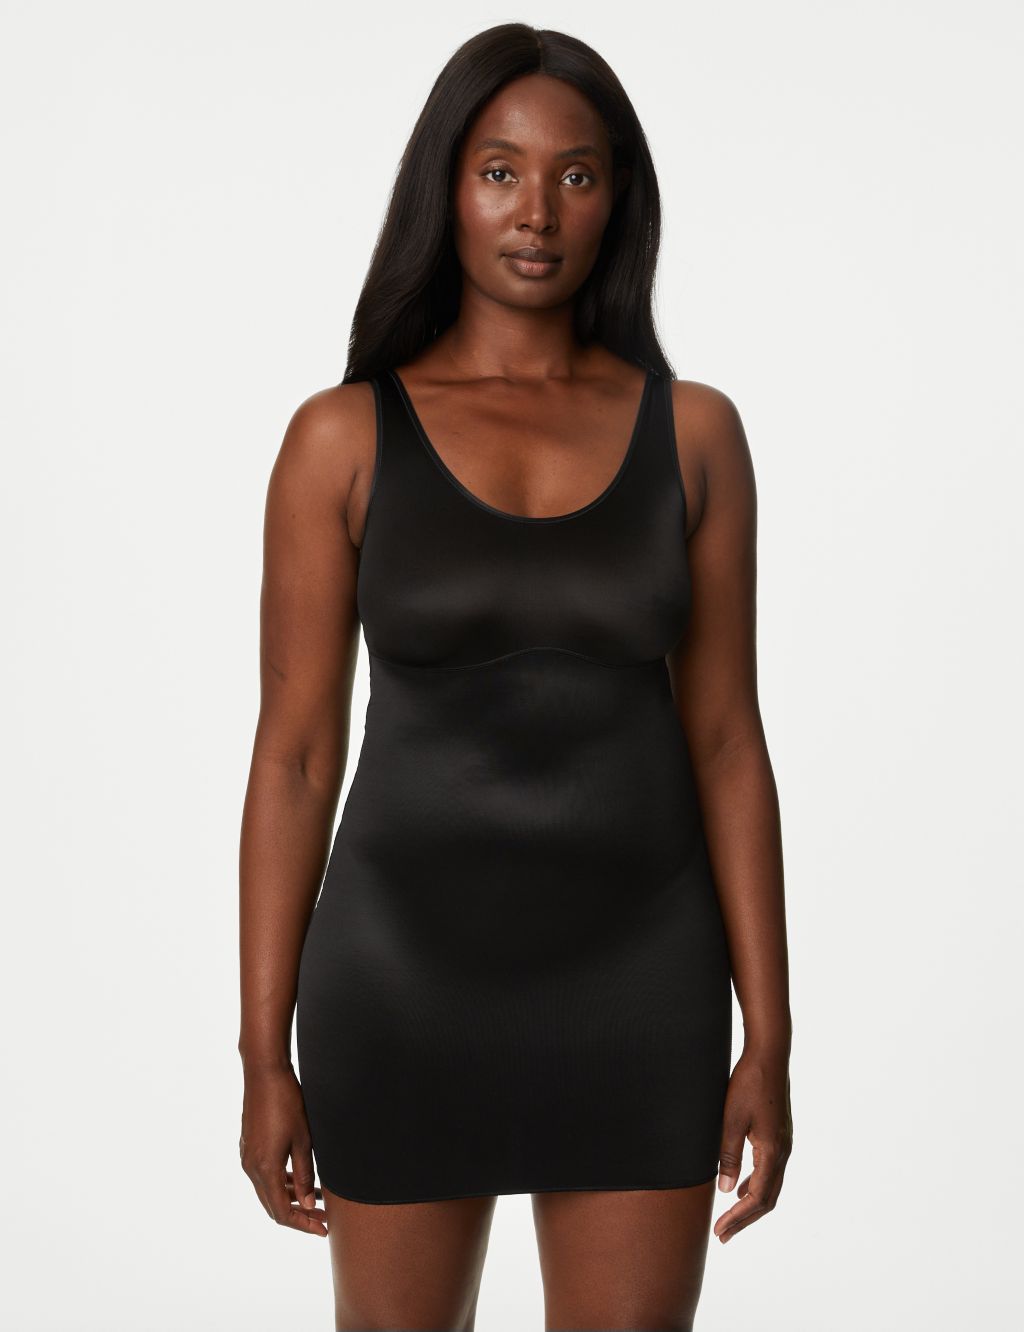 Strapless Full Body Slip Shapewear Mini Black Dress